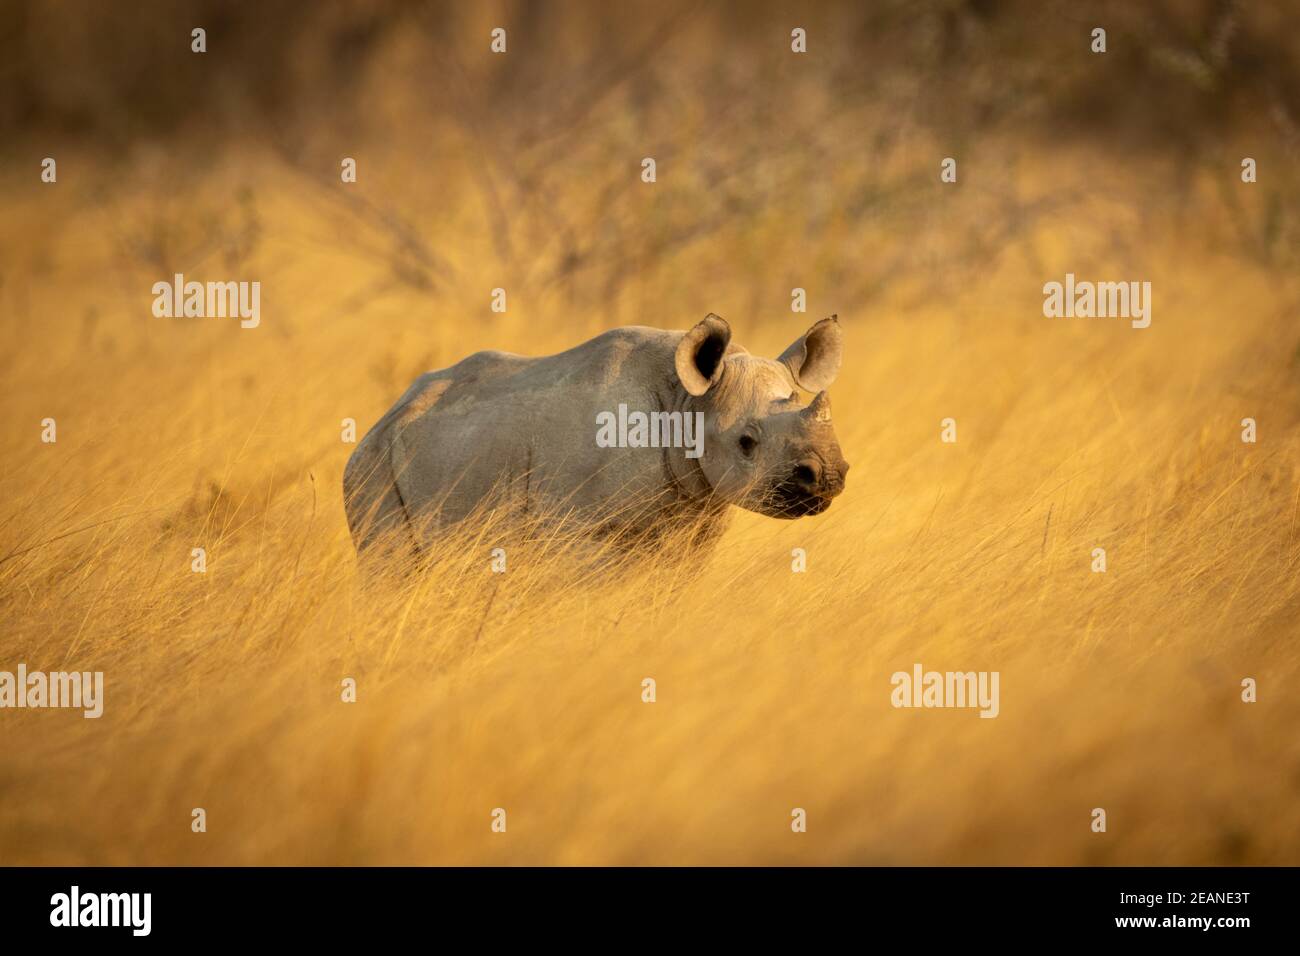 Baby black rhino in grass facing right Stock Photo